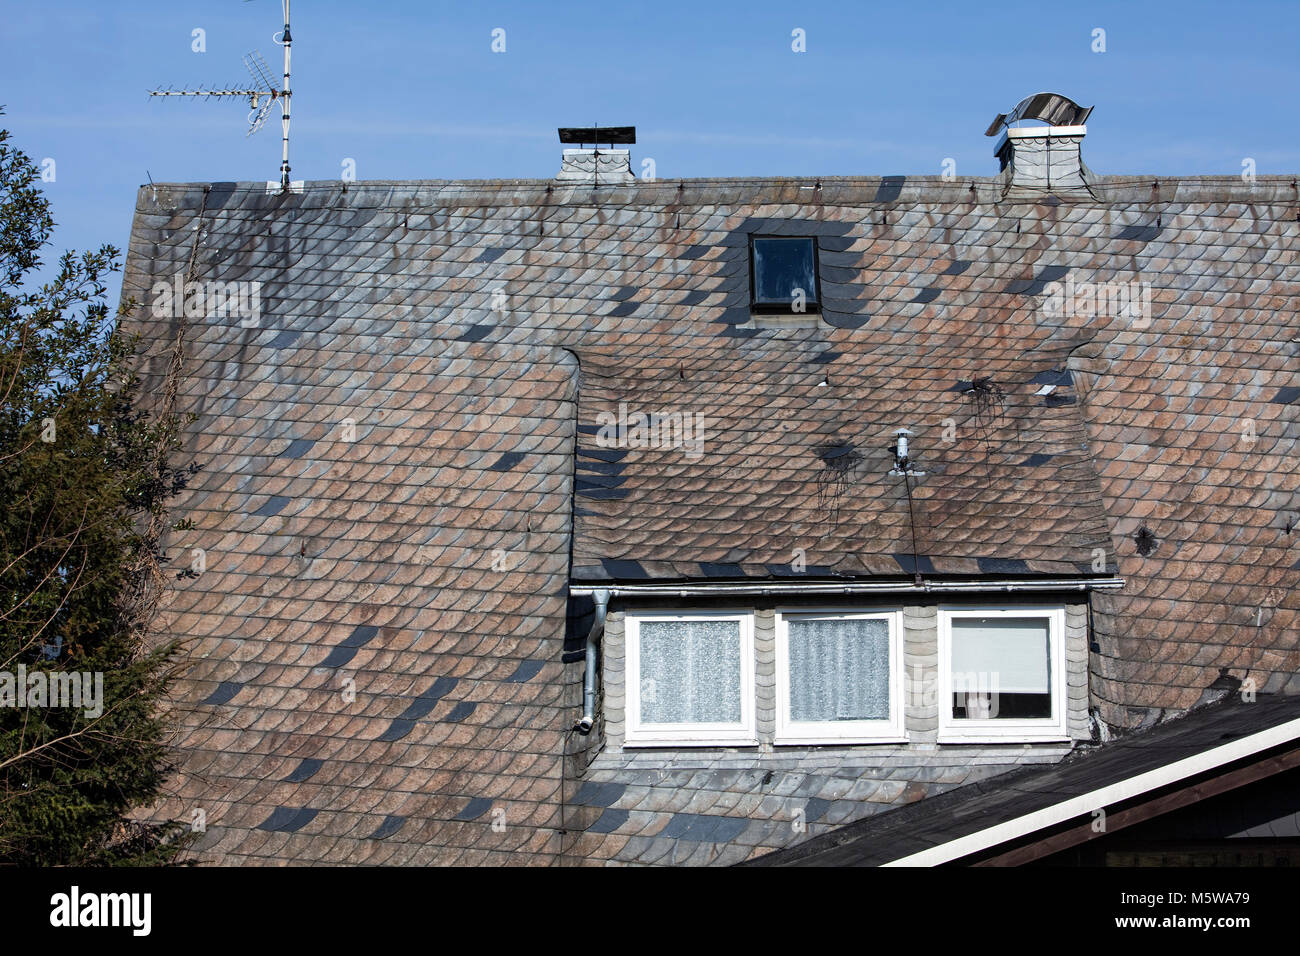 Vecchio tetto di ardesia, altes, mit Schiefer gedecktes Dach Foto Stock